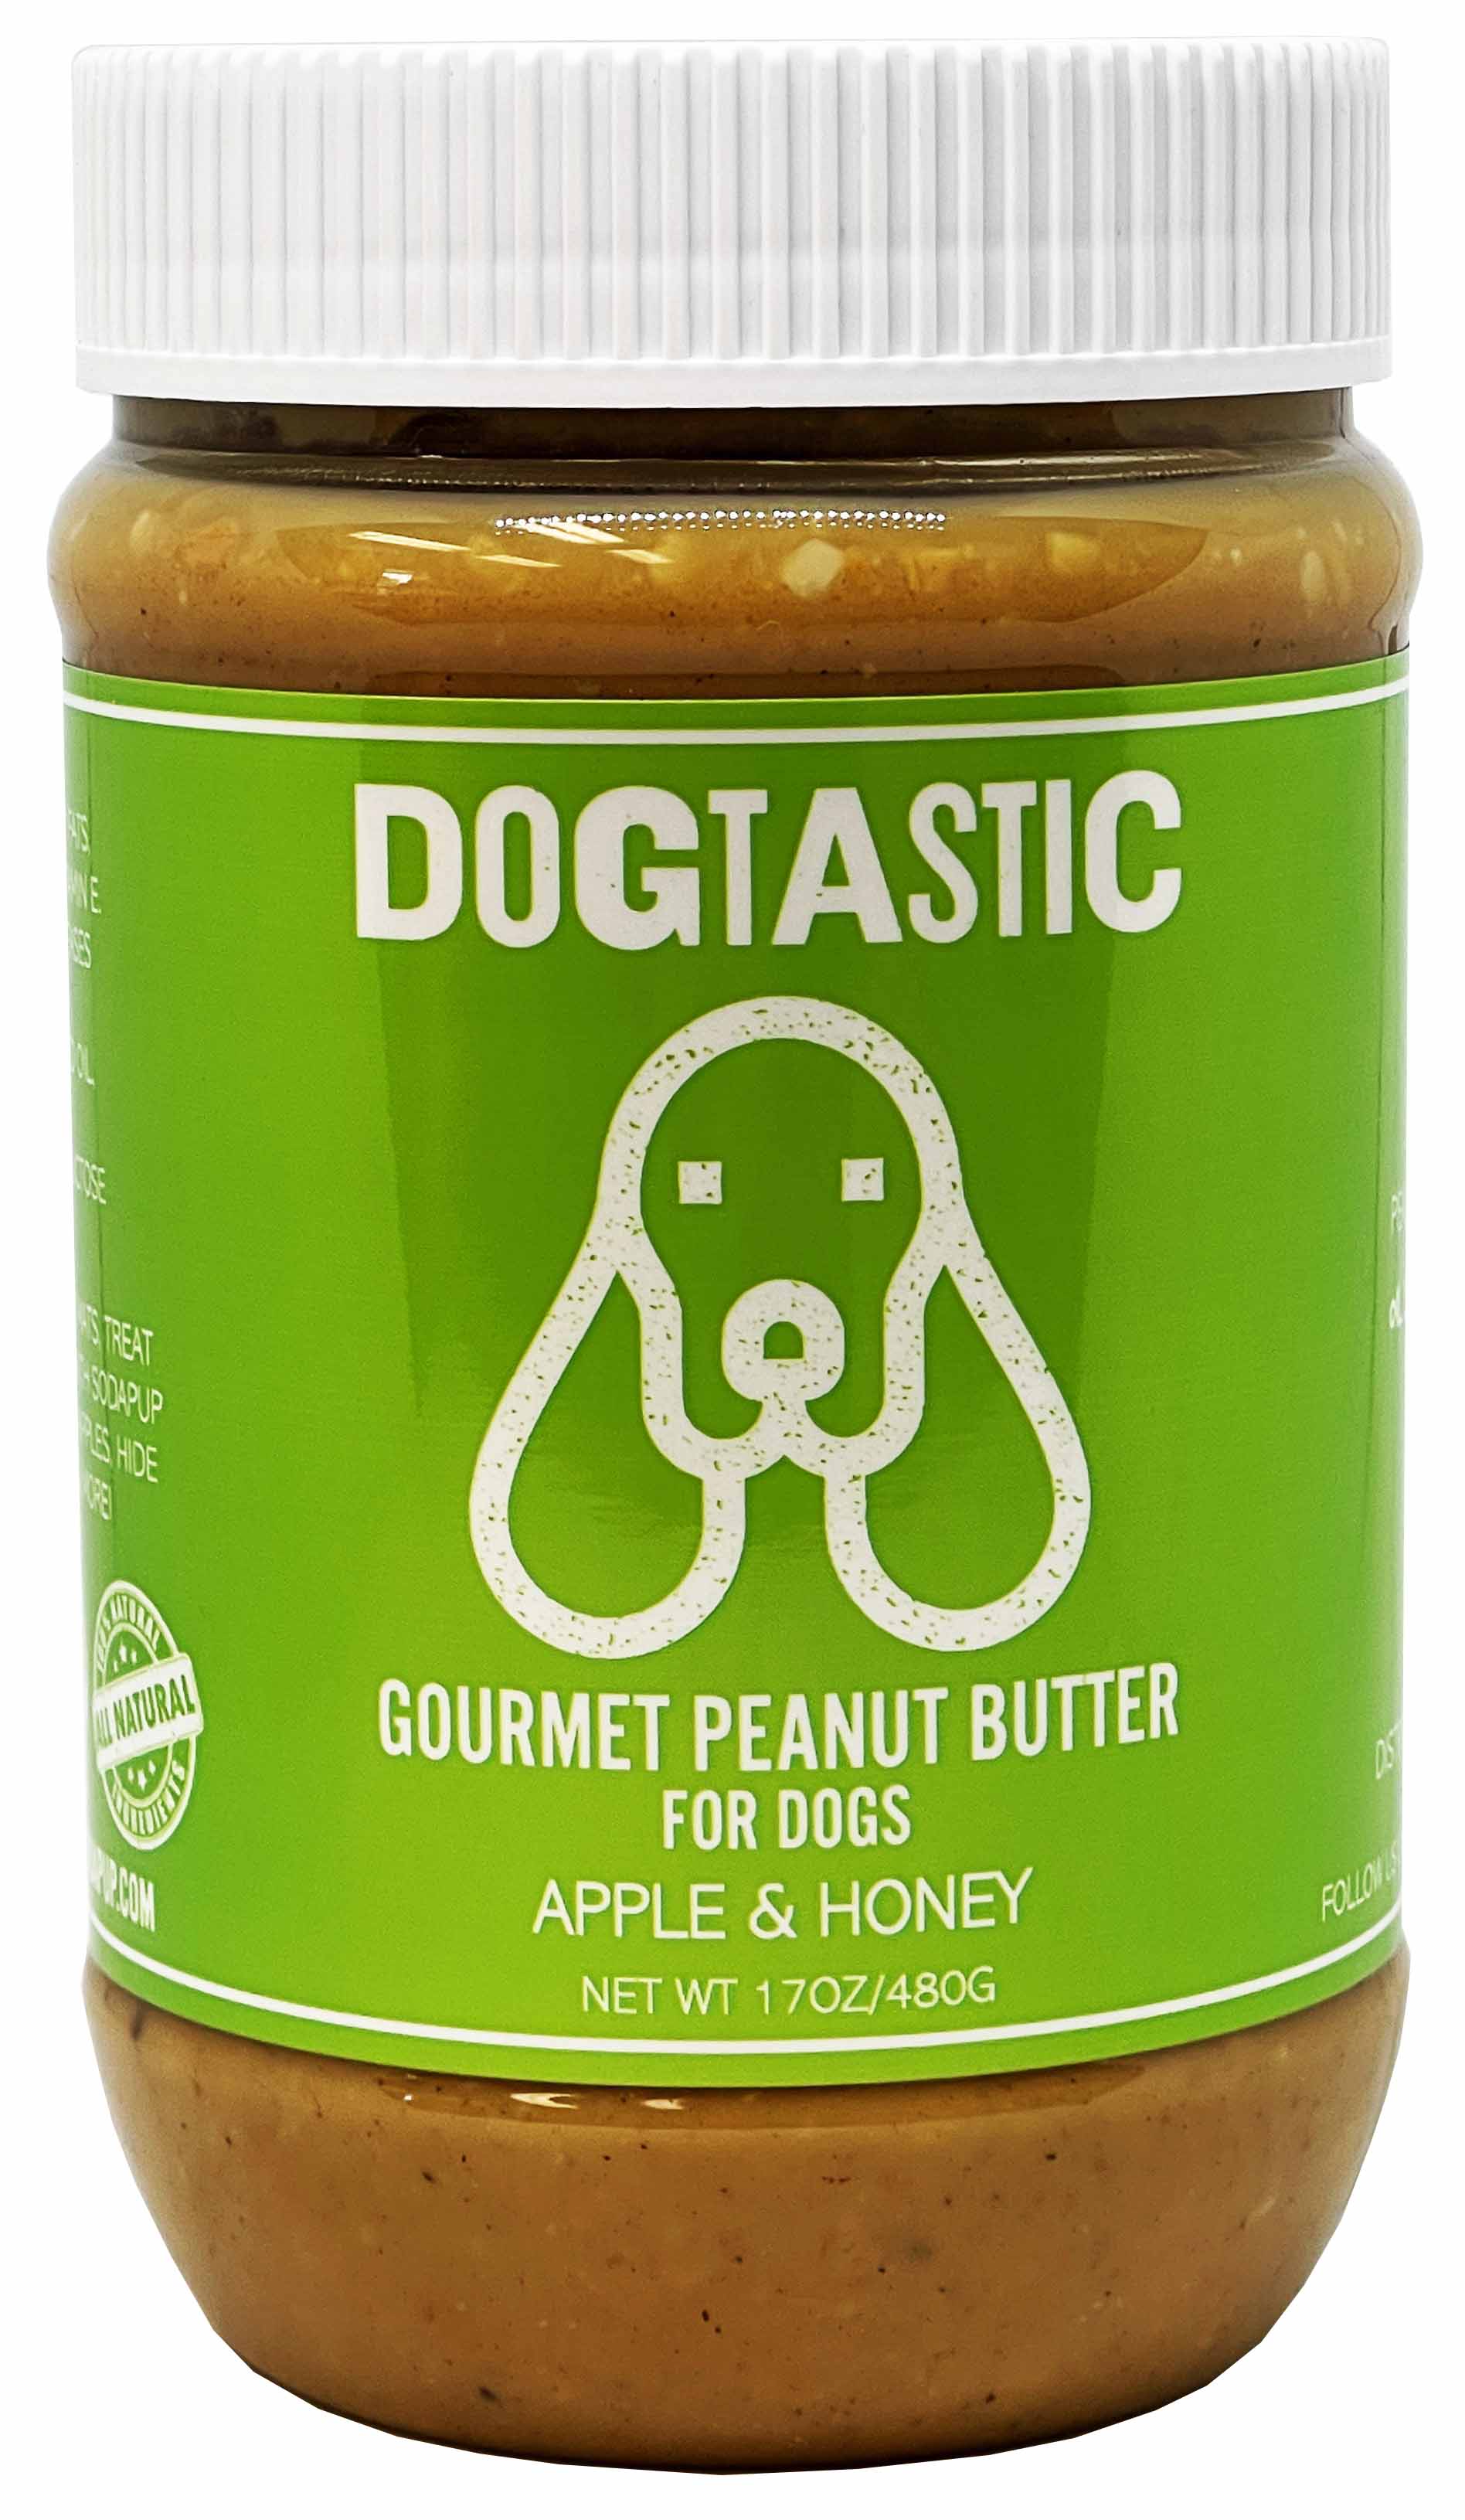 Gourmet Peanut Butter for Dogs - Apple & Honey Flavor